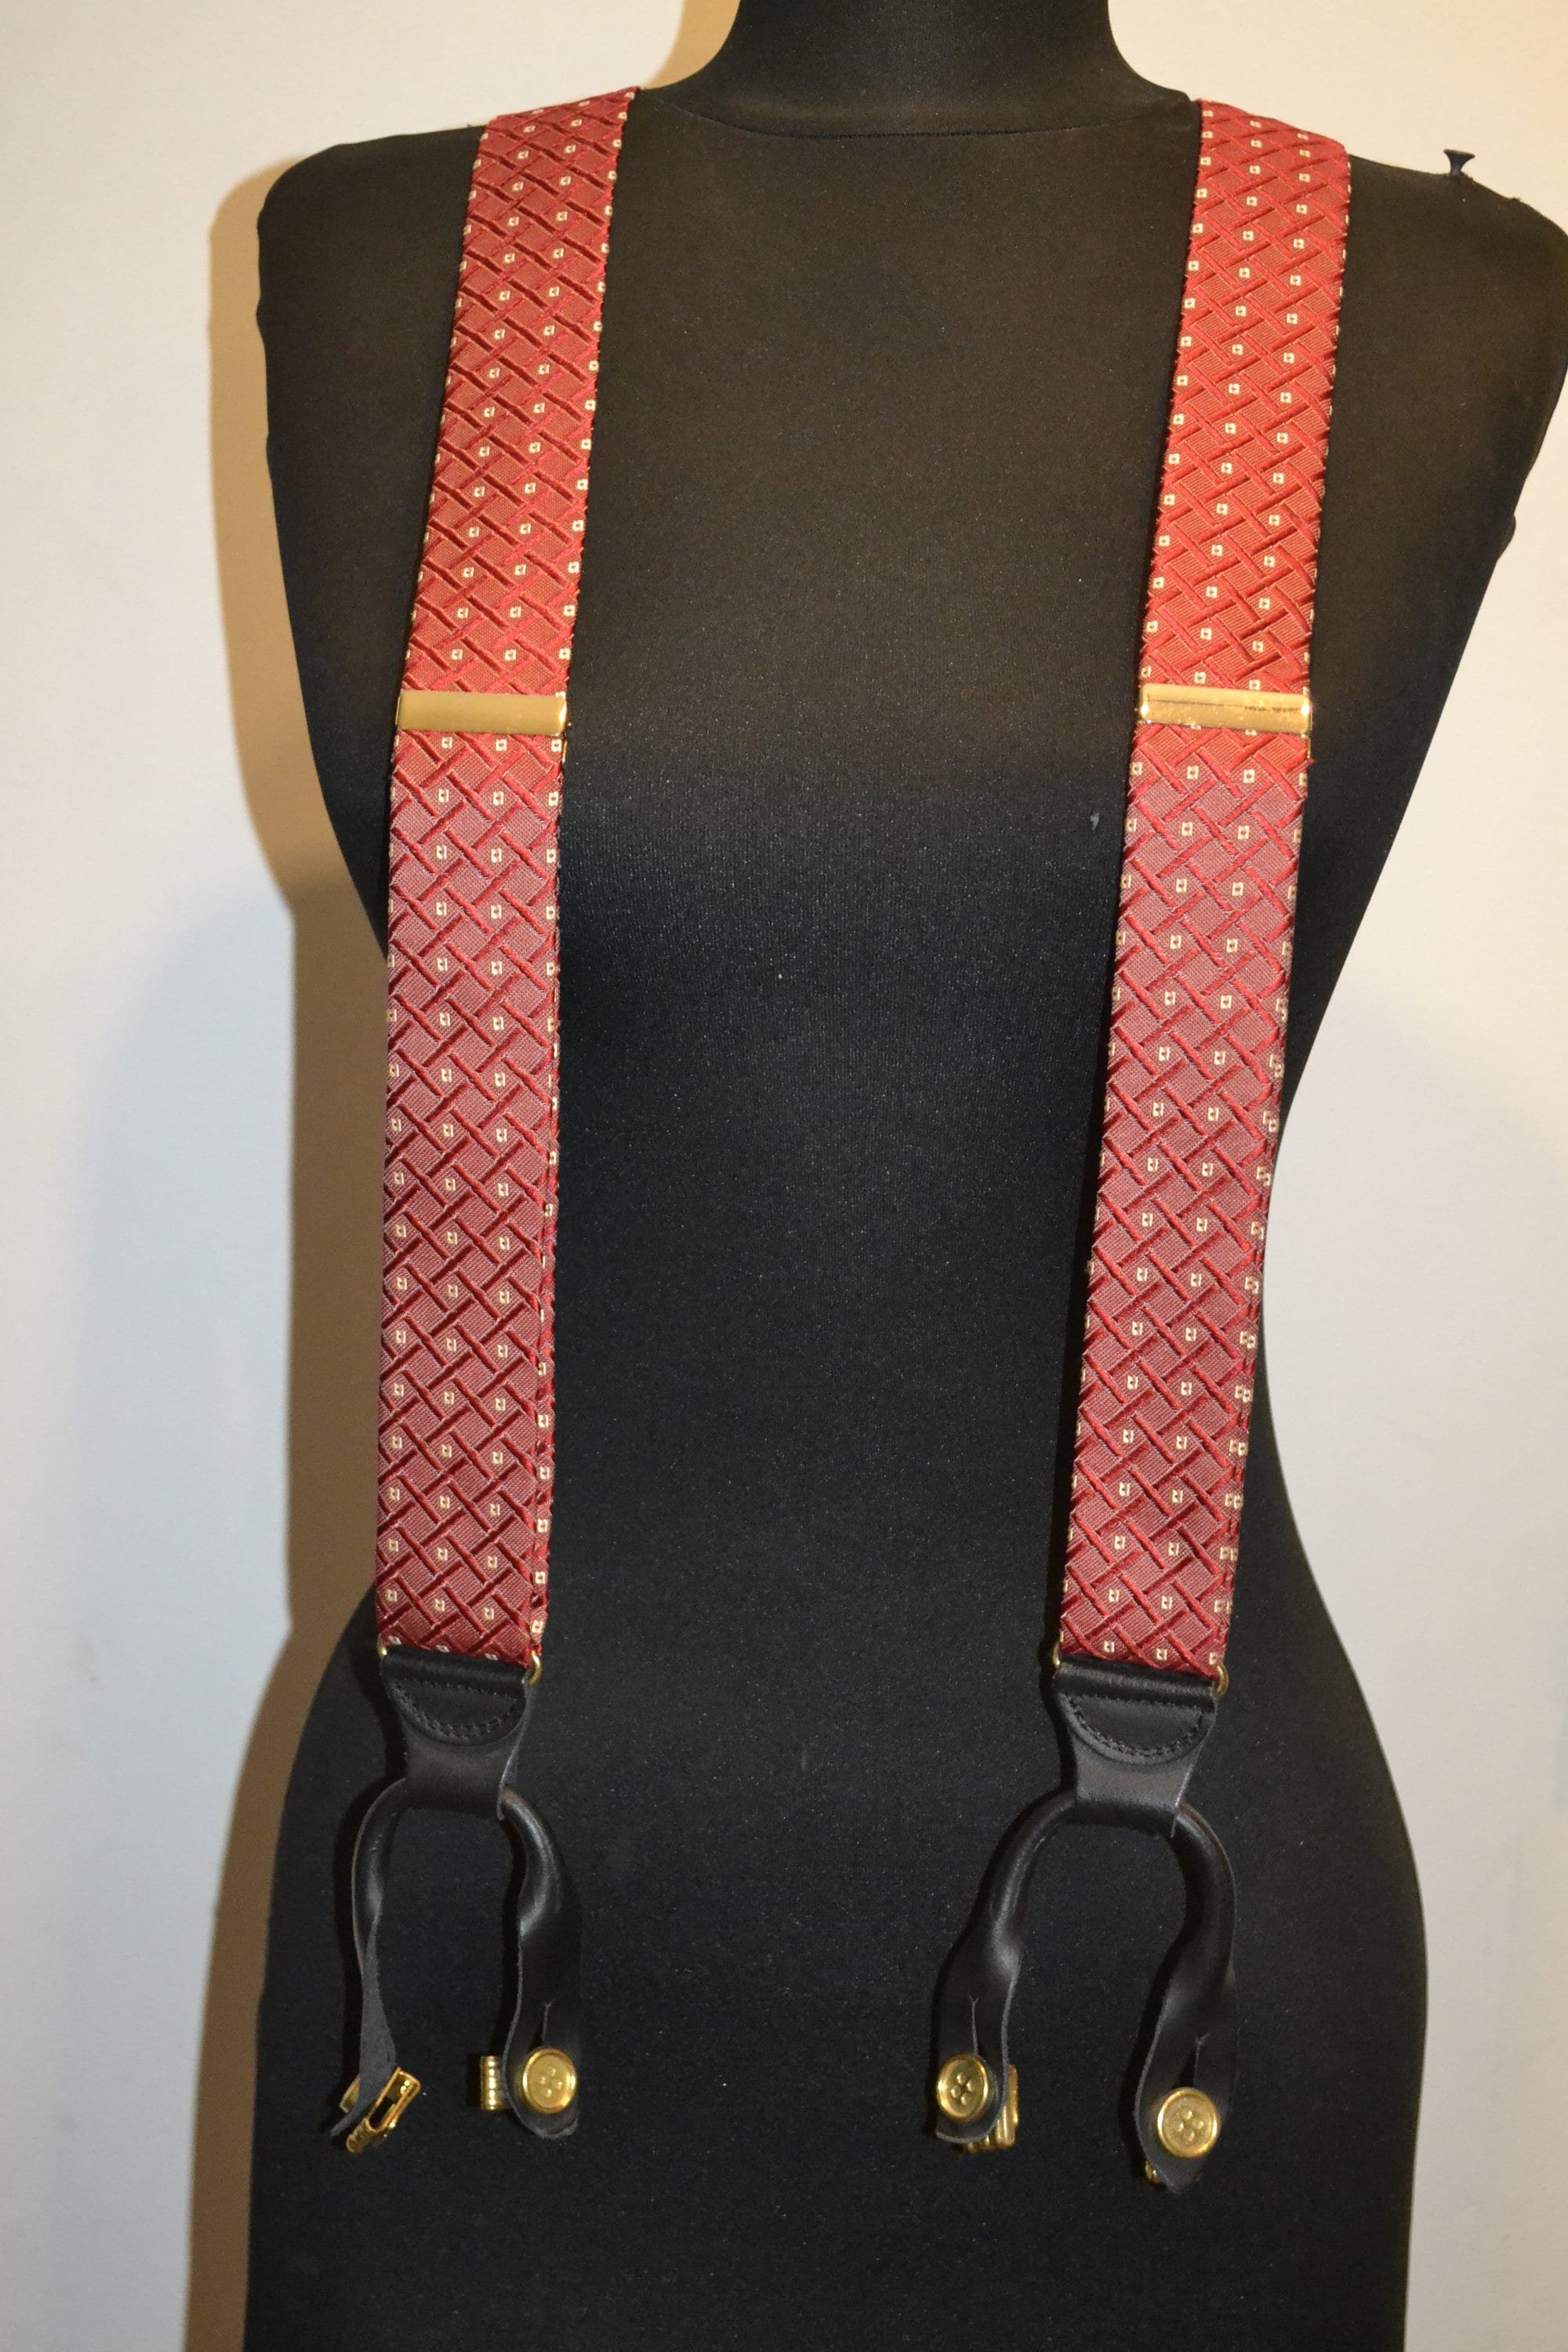 Maroon Trouser Braces Y-shape Back Suspenders TRAFALGAR Circa 1970s 